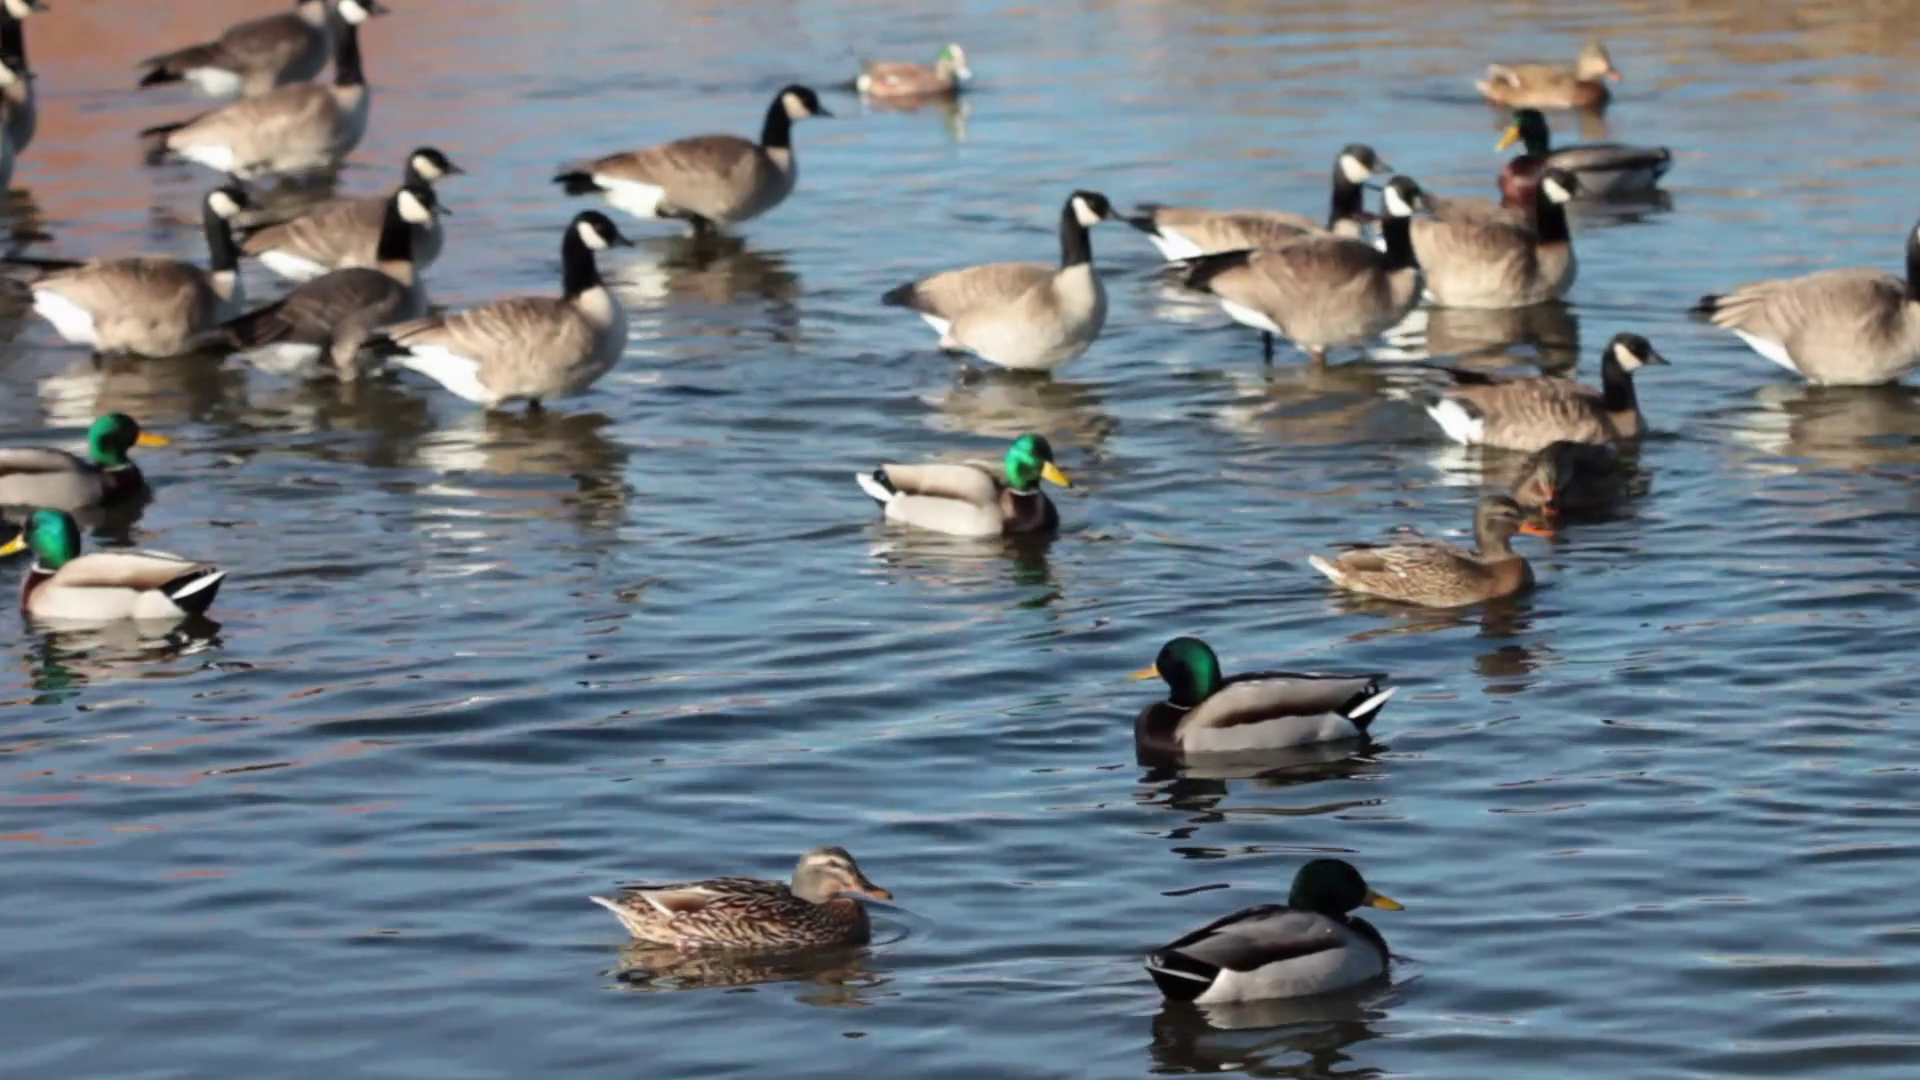 Ducks Walking Into Water Stock Video Footage - VideoBlocks